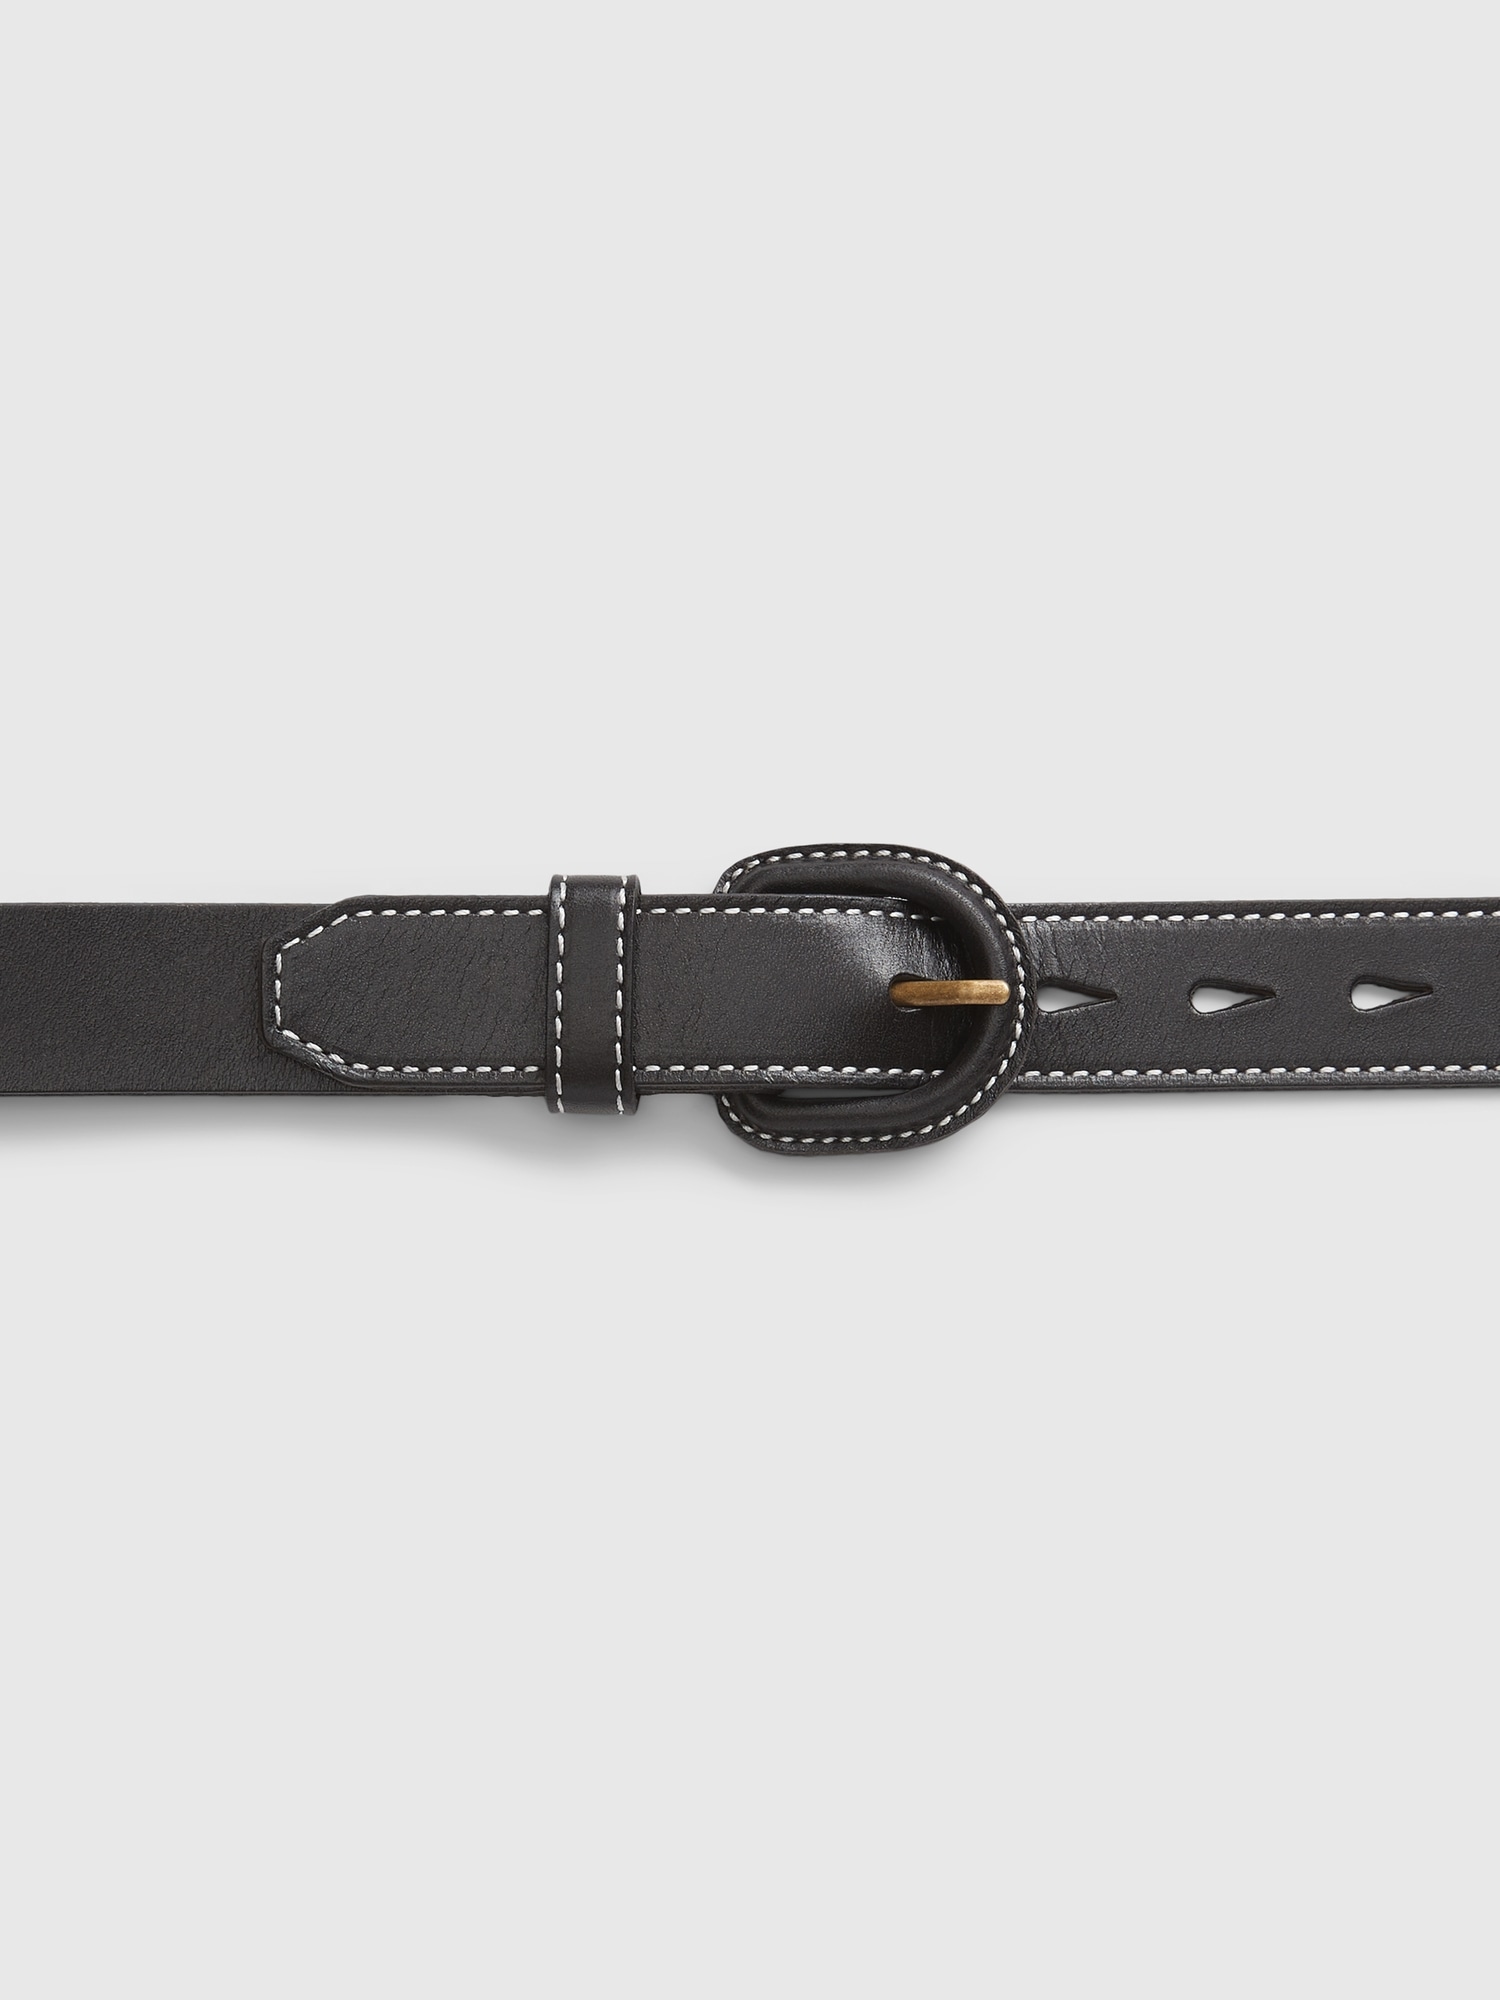 Contrast Stitch Leather Belt | Gap